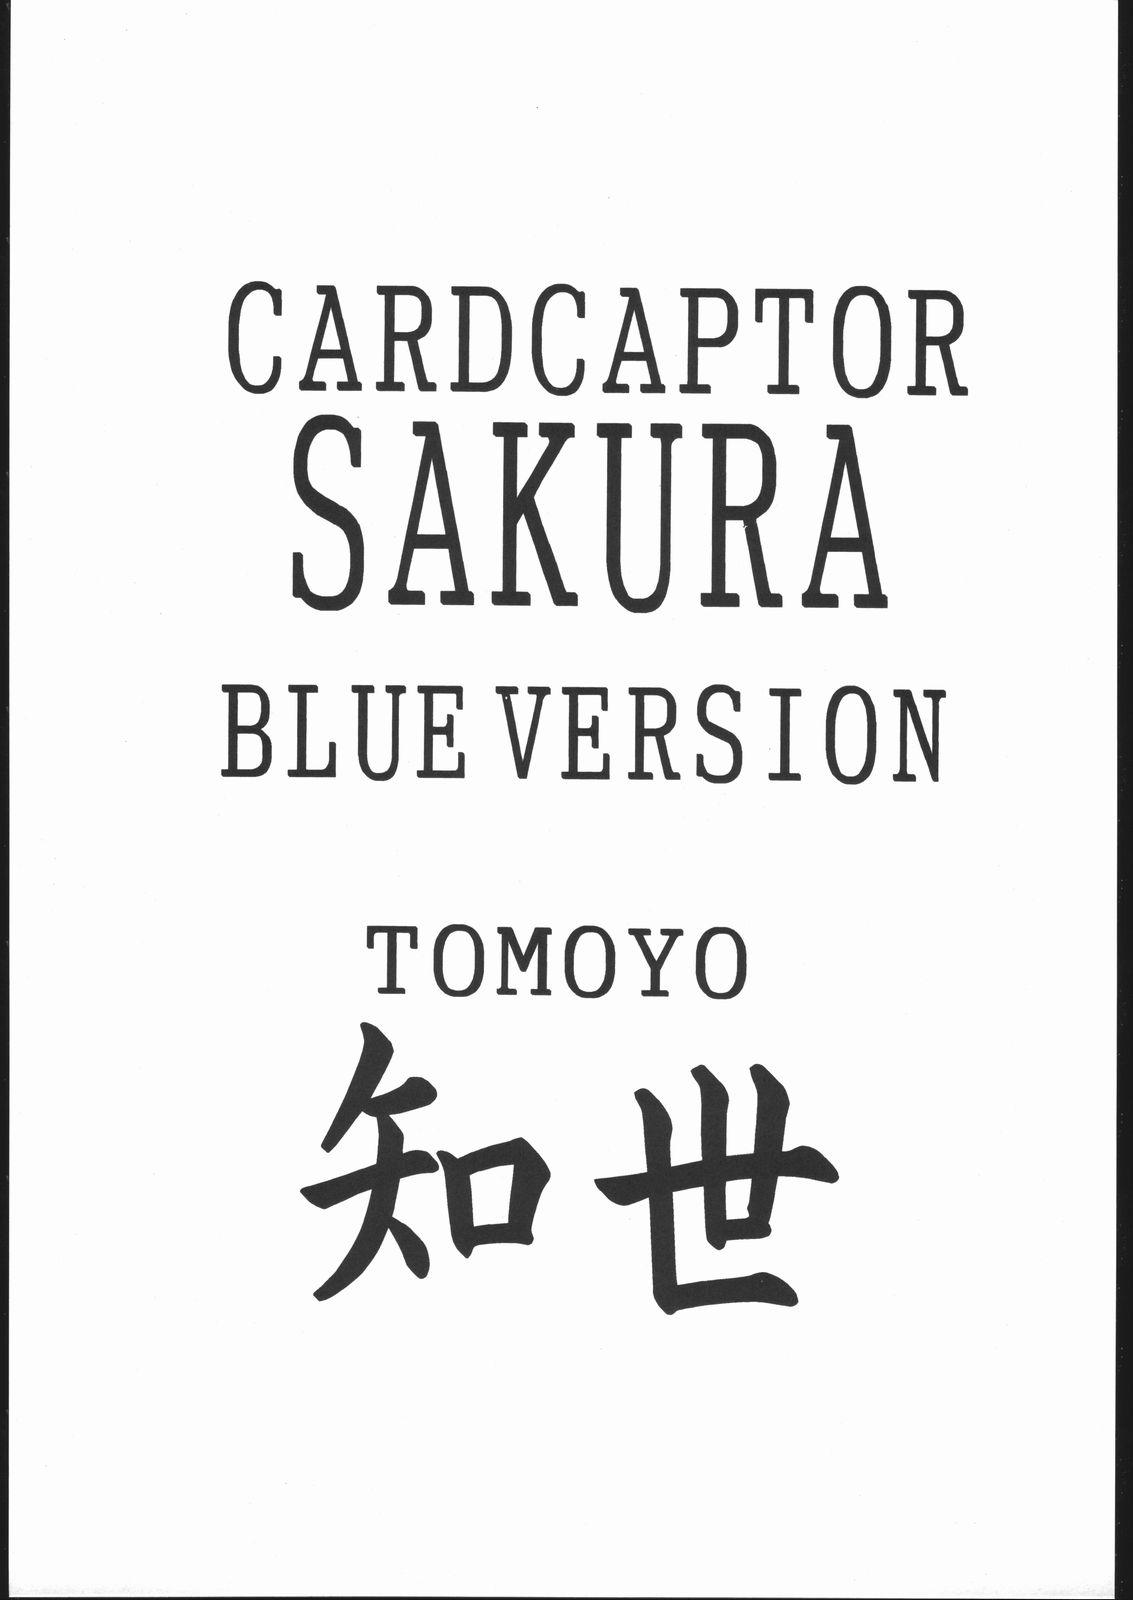 Polish Card Captor Sakura Blue Version - Cardcaptor sakura Muscular - Page 2